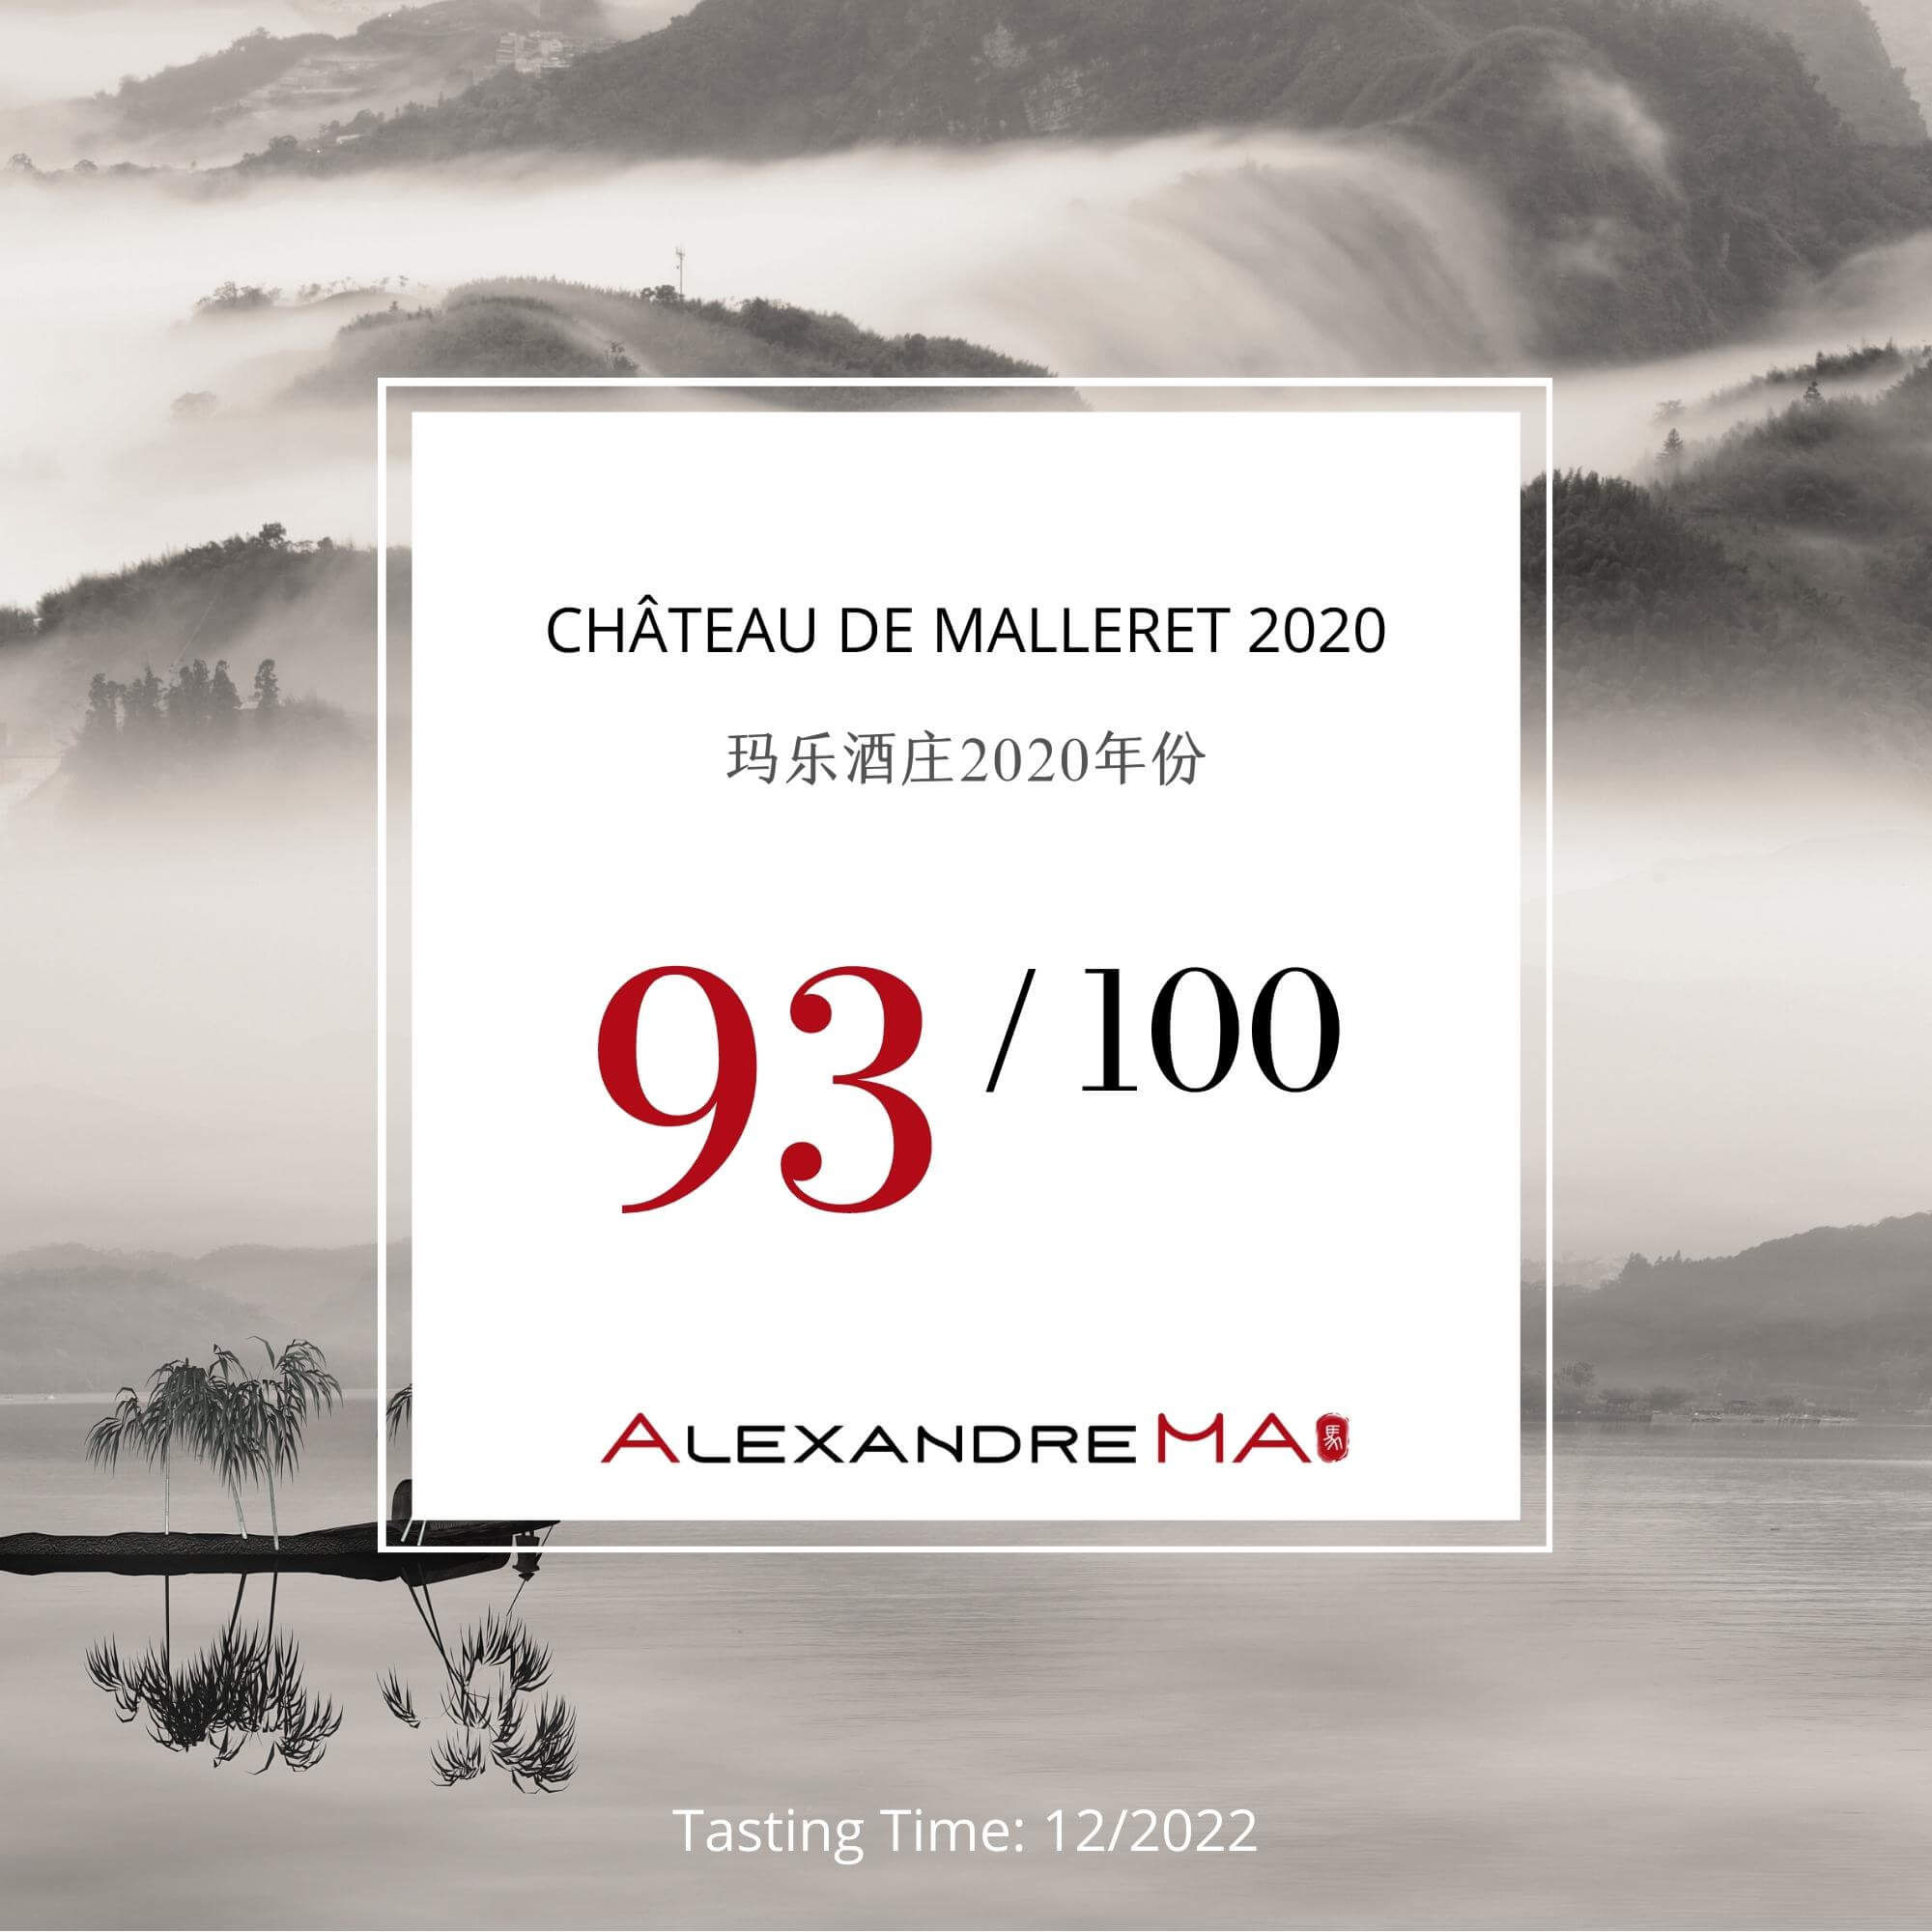 Château de Malleret 2020 - Alexandre MA